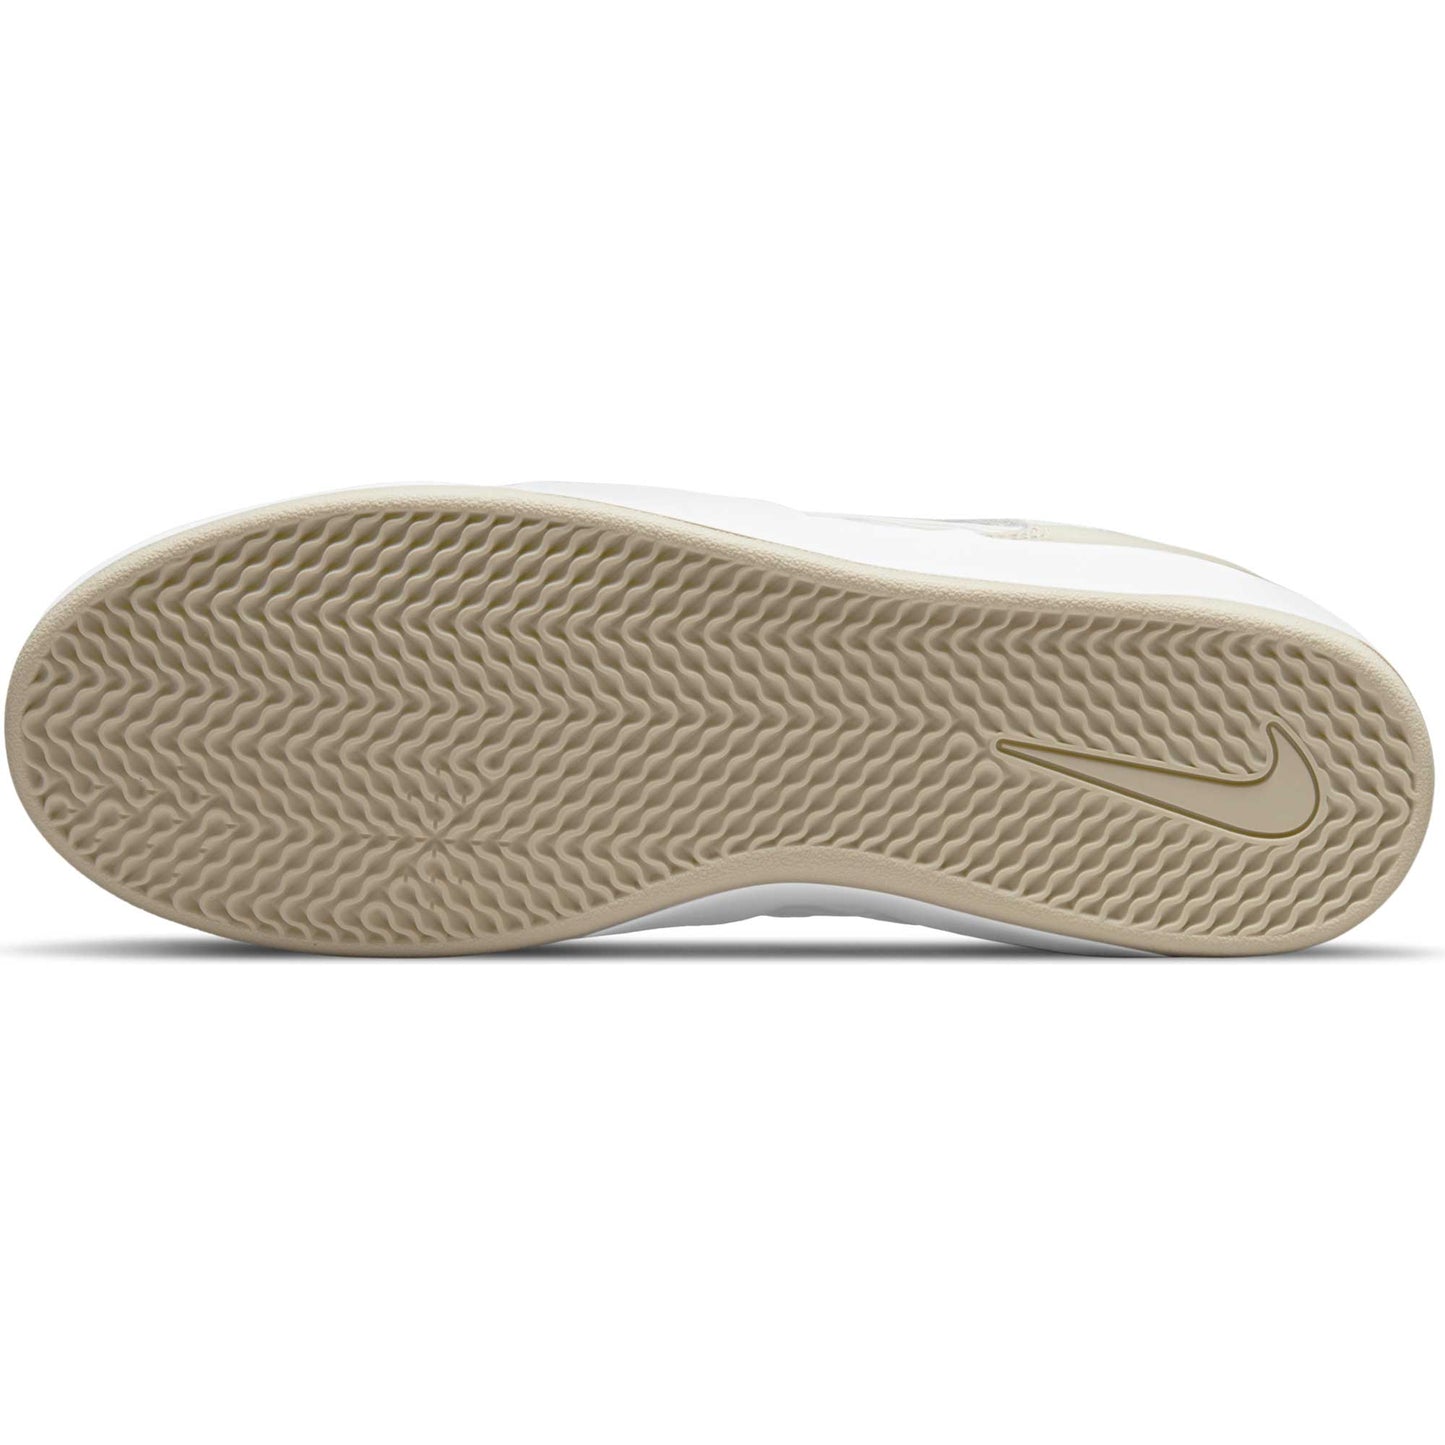 Nike SB Ishod Wair Premium, light stone/khaki-summit white-white - Tiki Room Skateboards - 8